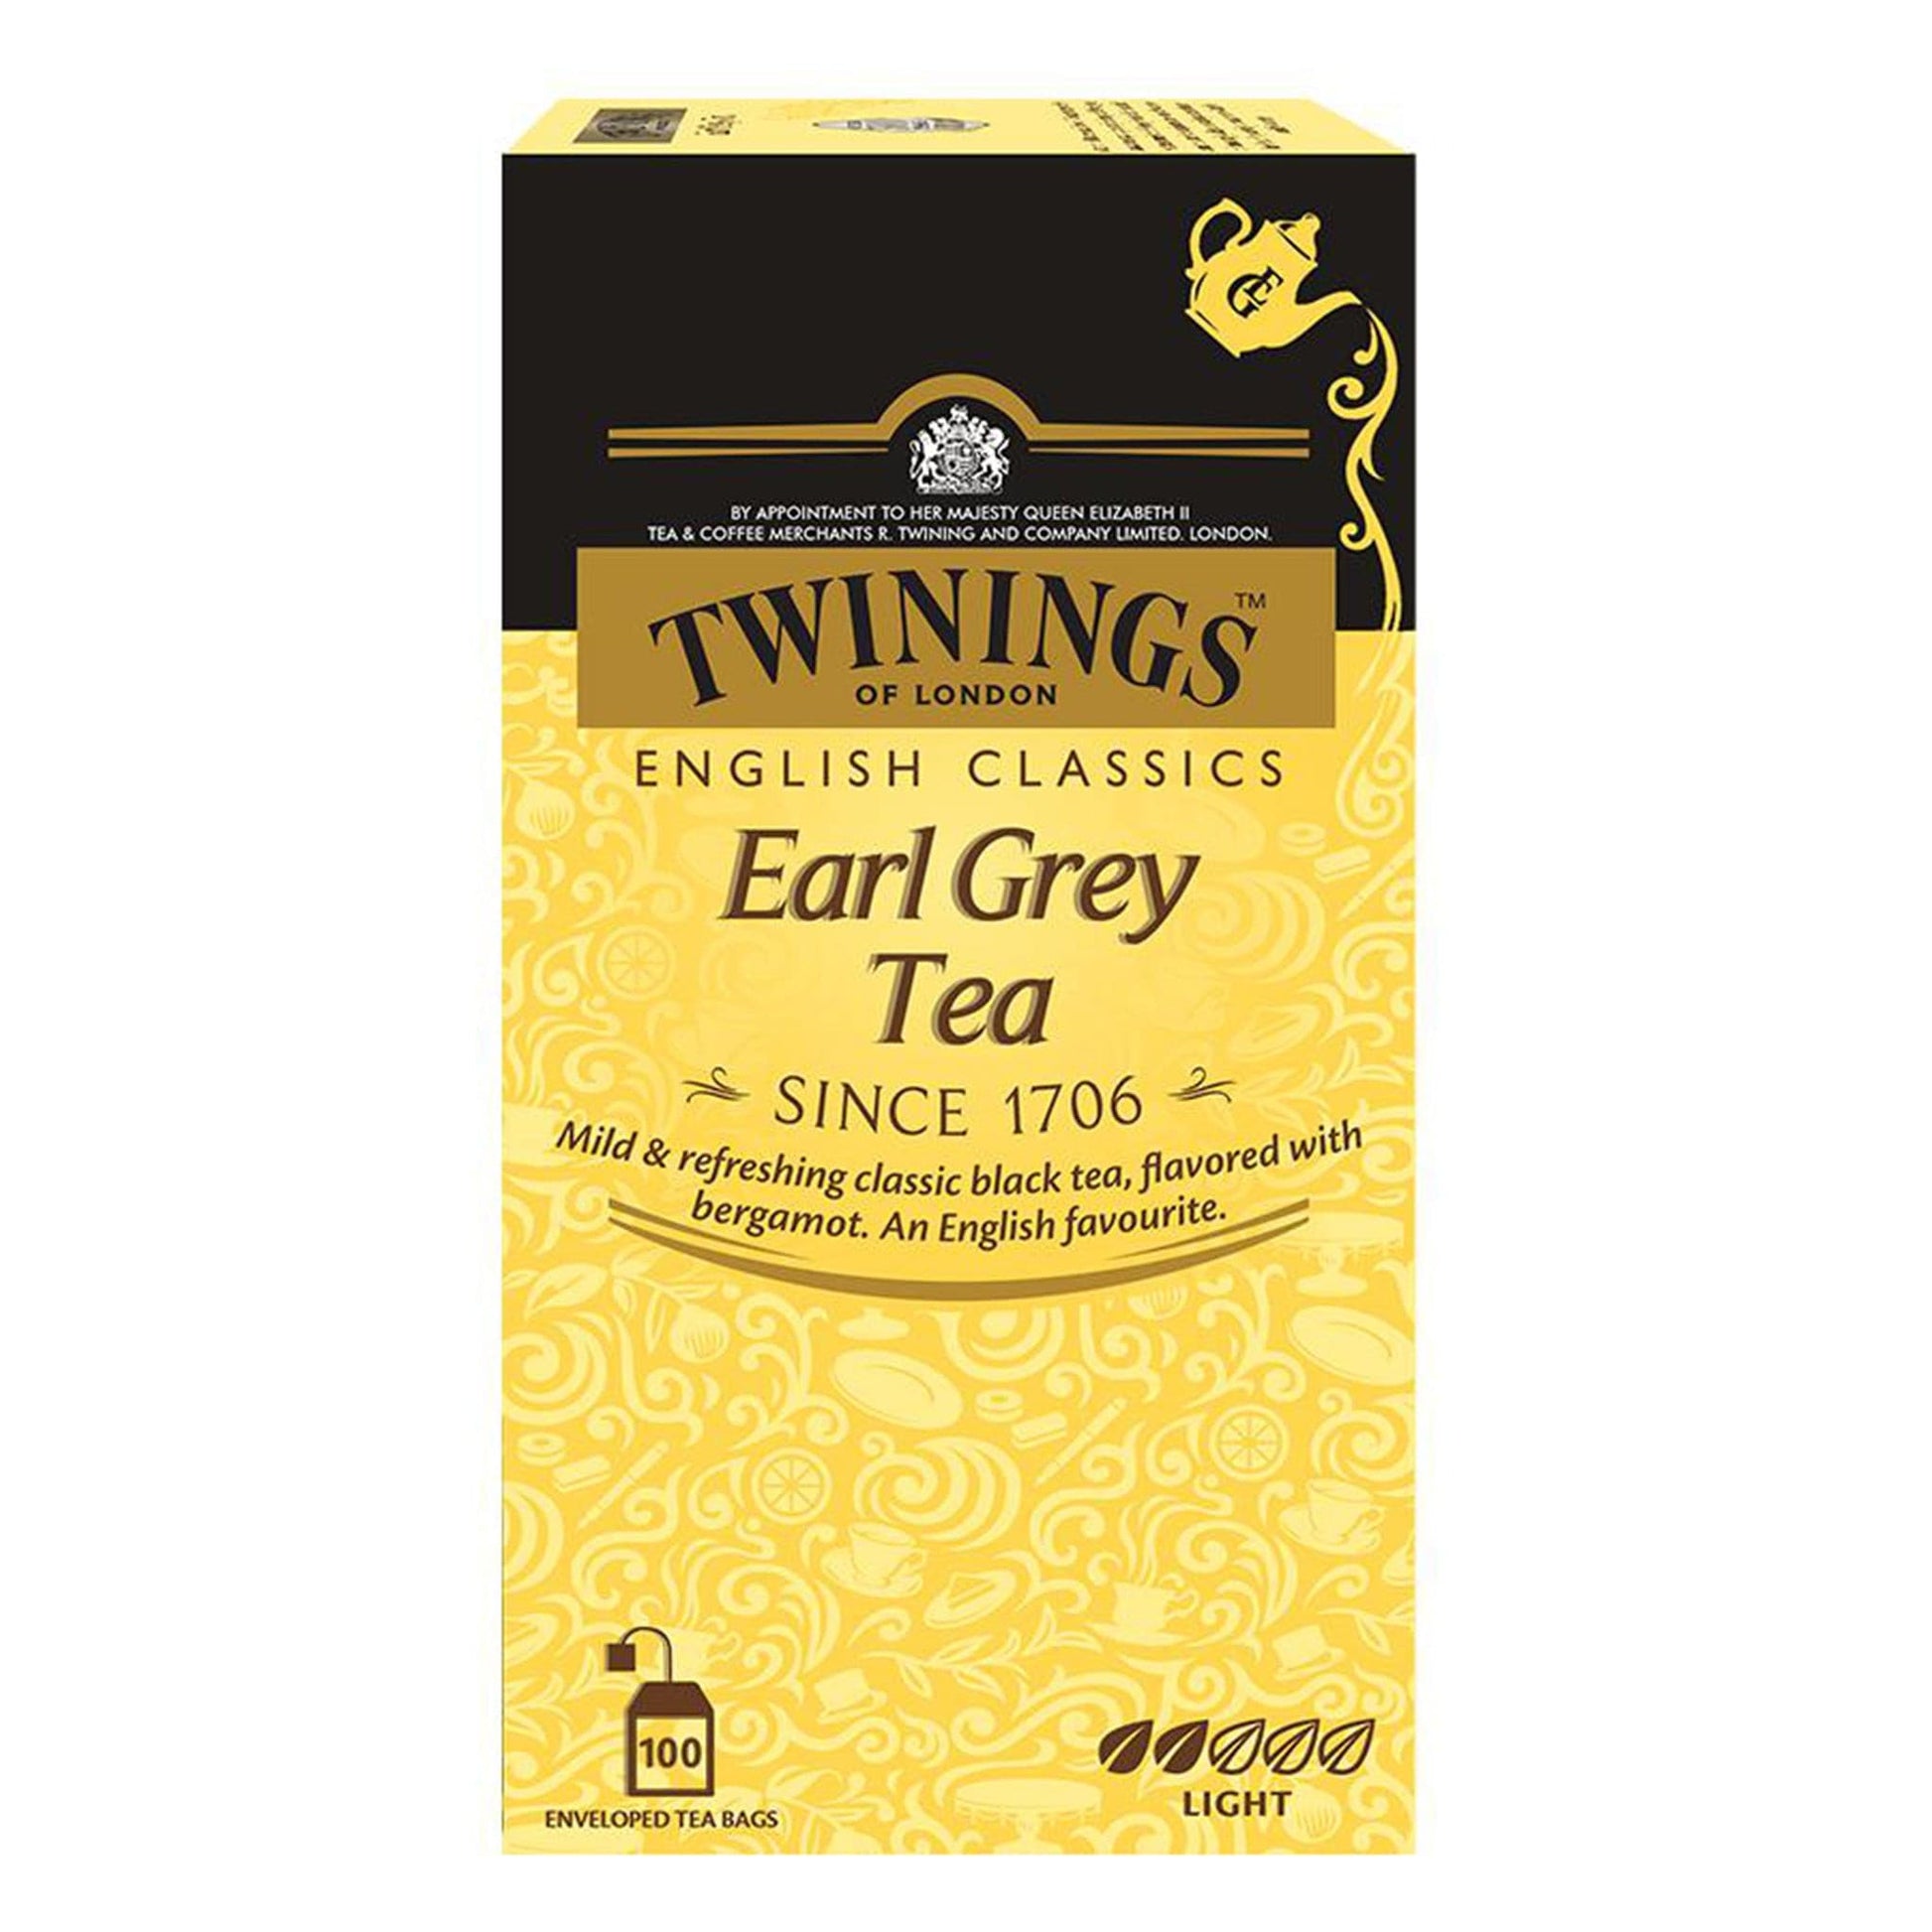 Twinings Classics Earl Grey Tea.